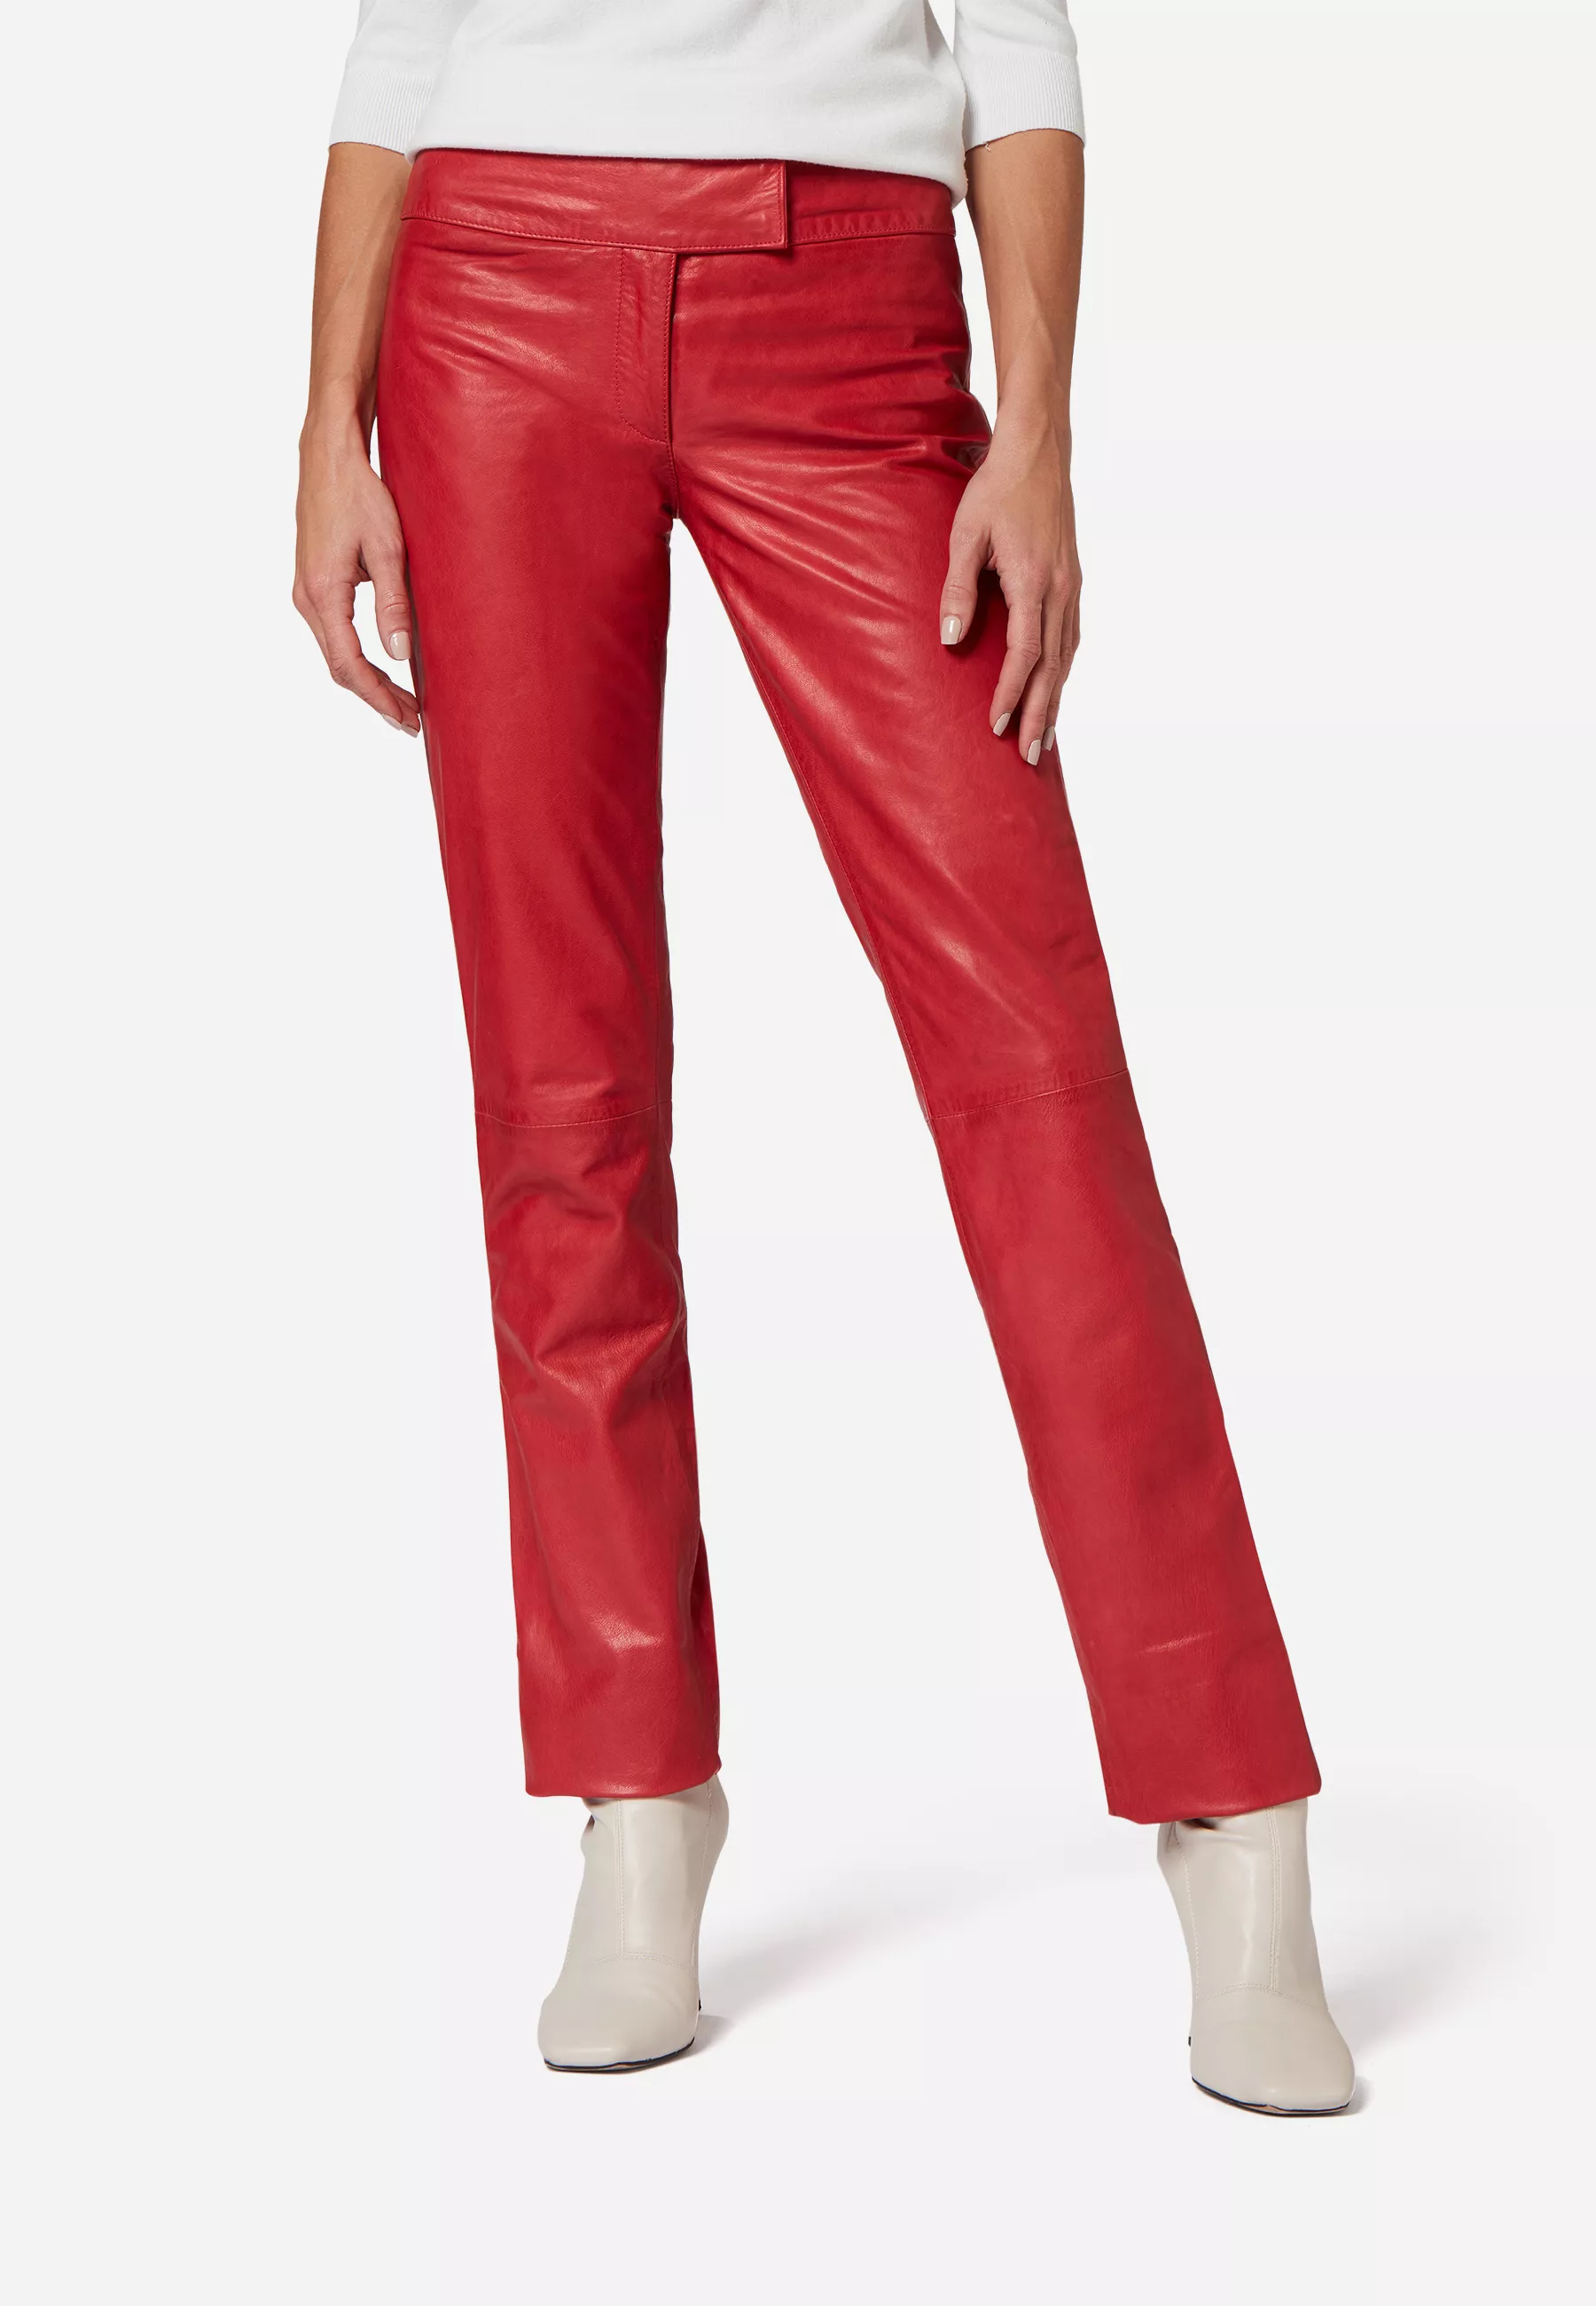 Damen Lederhose Low Cut in Rot von Ricano, Frontansicht am Model